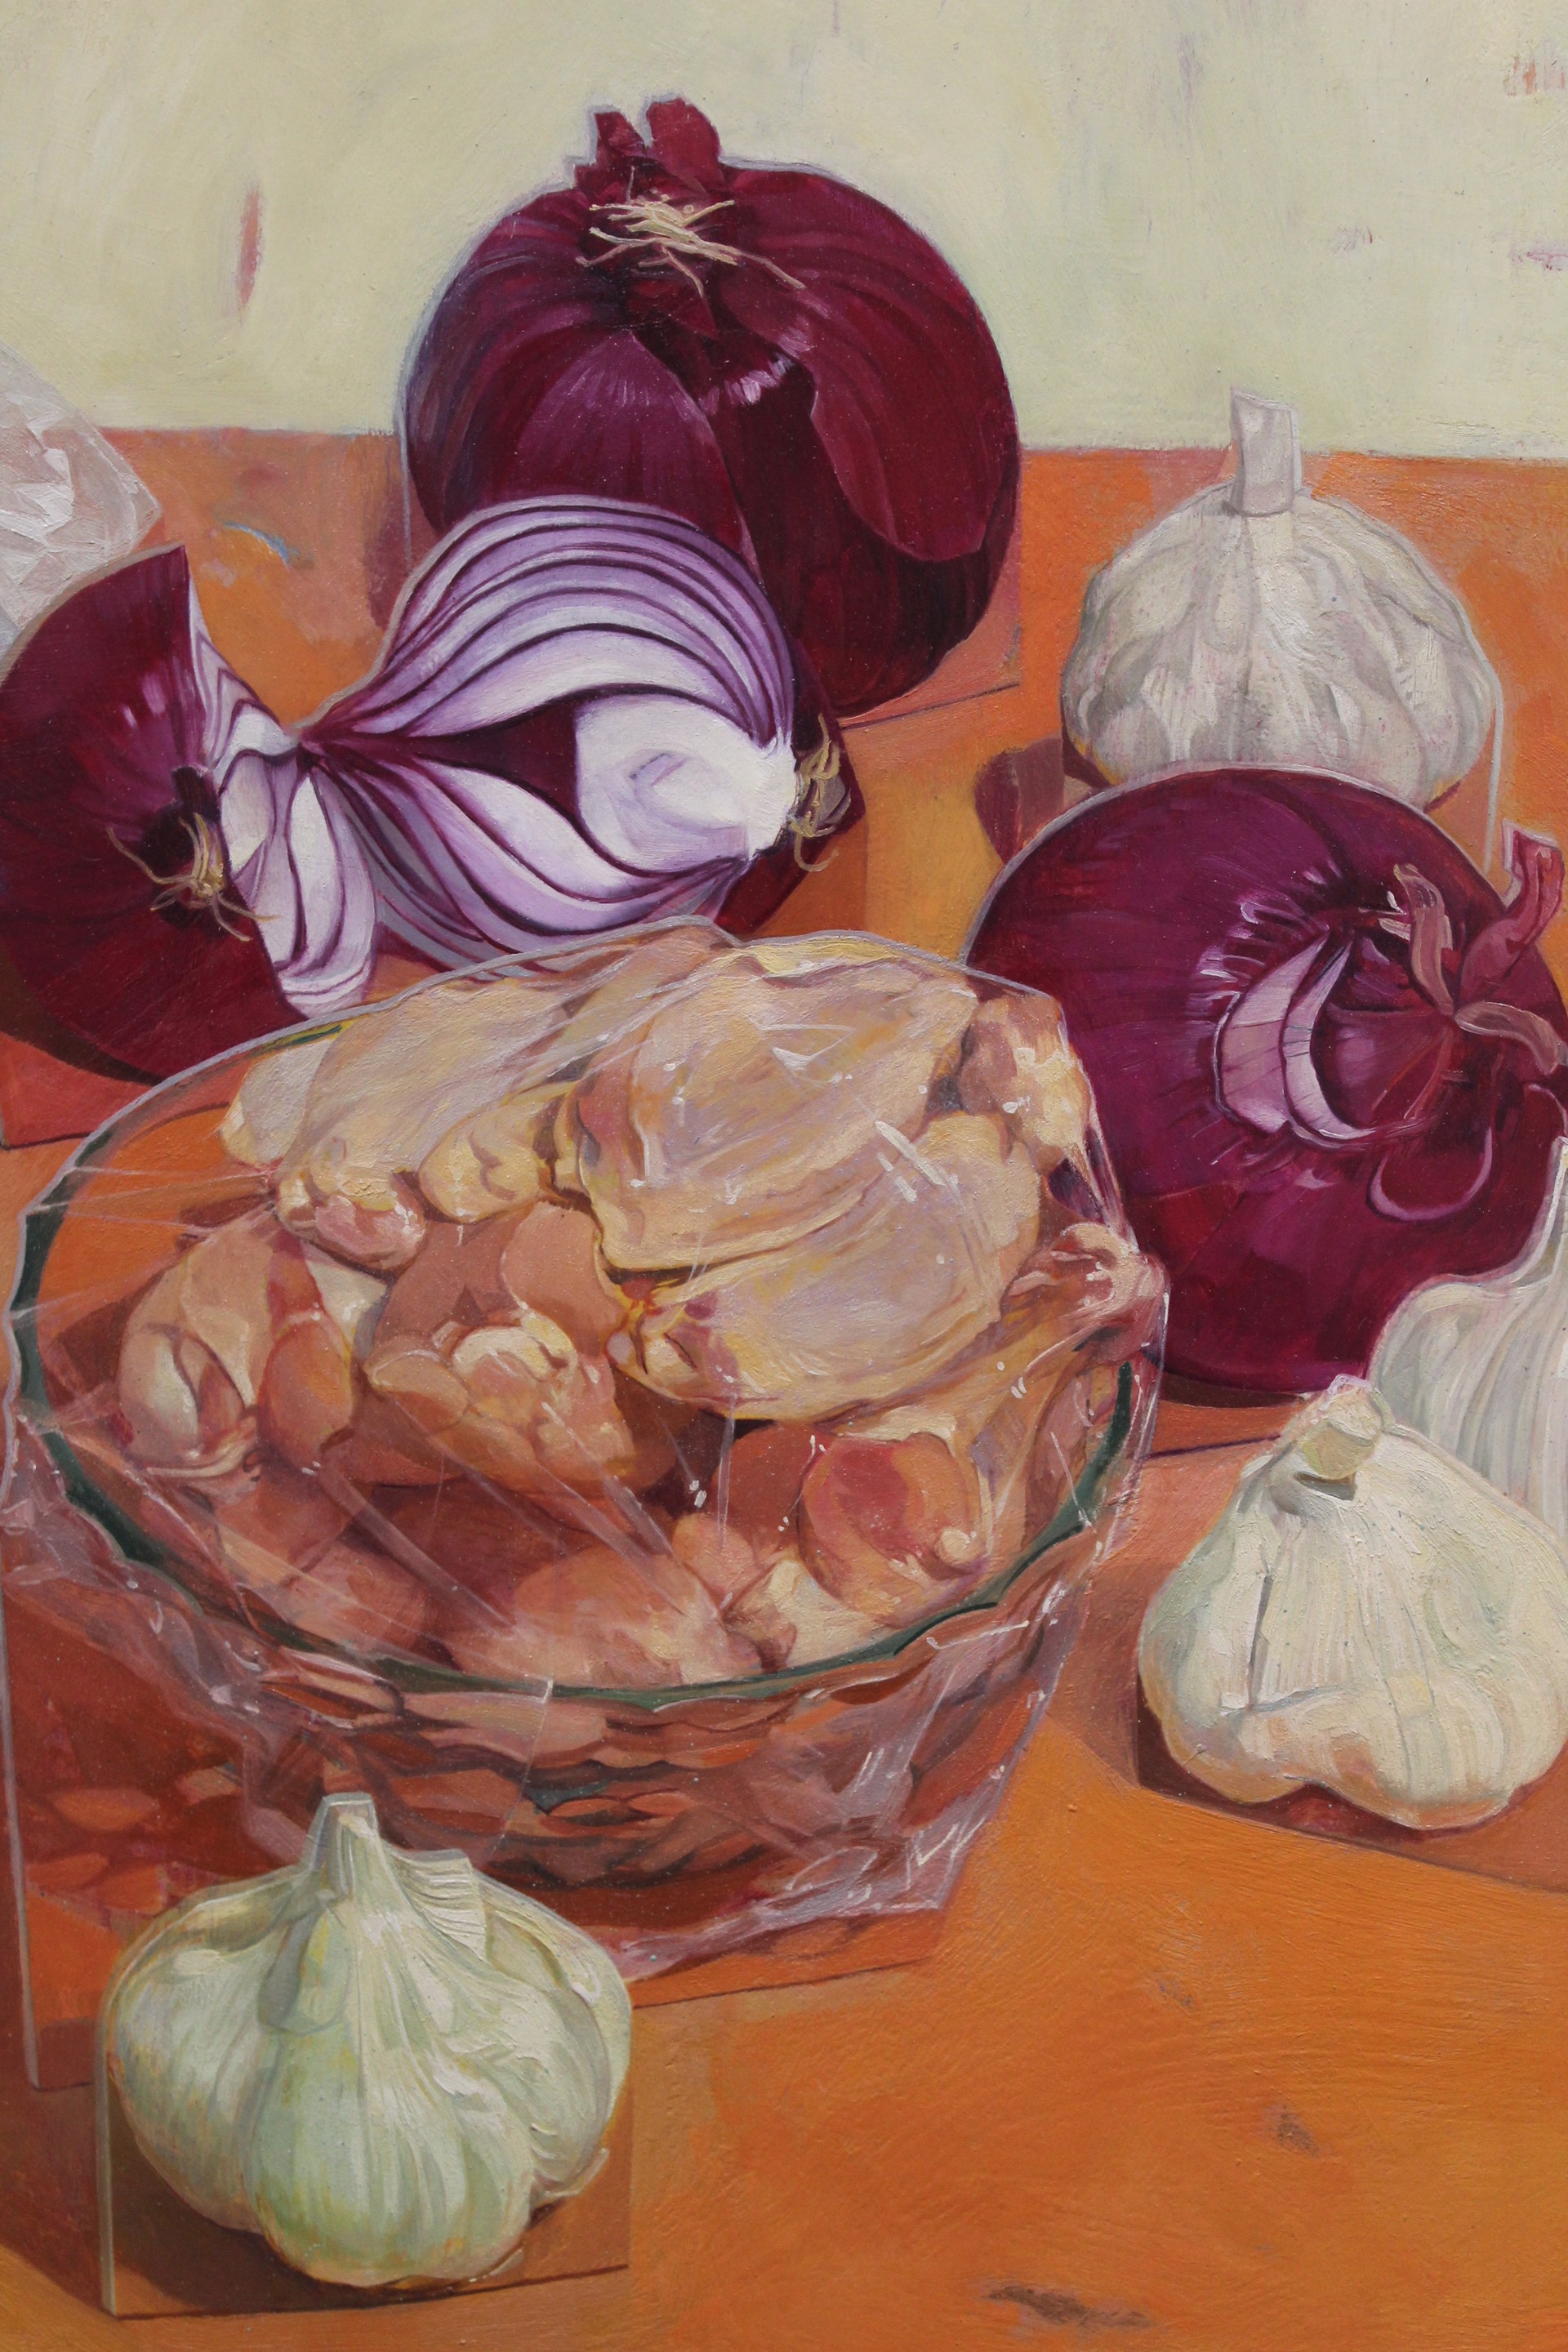 Garlic Wings by Benjamin J. Shamback